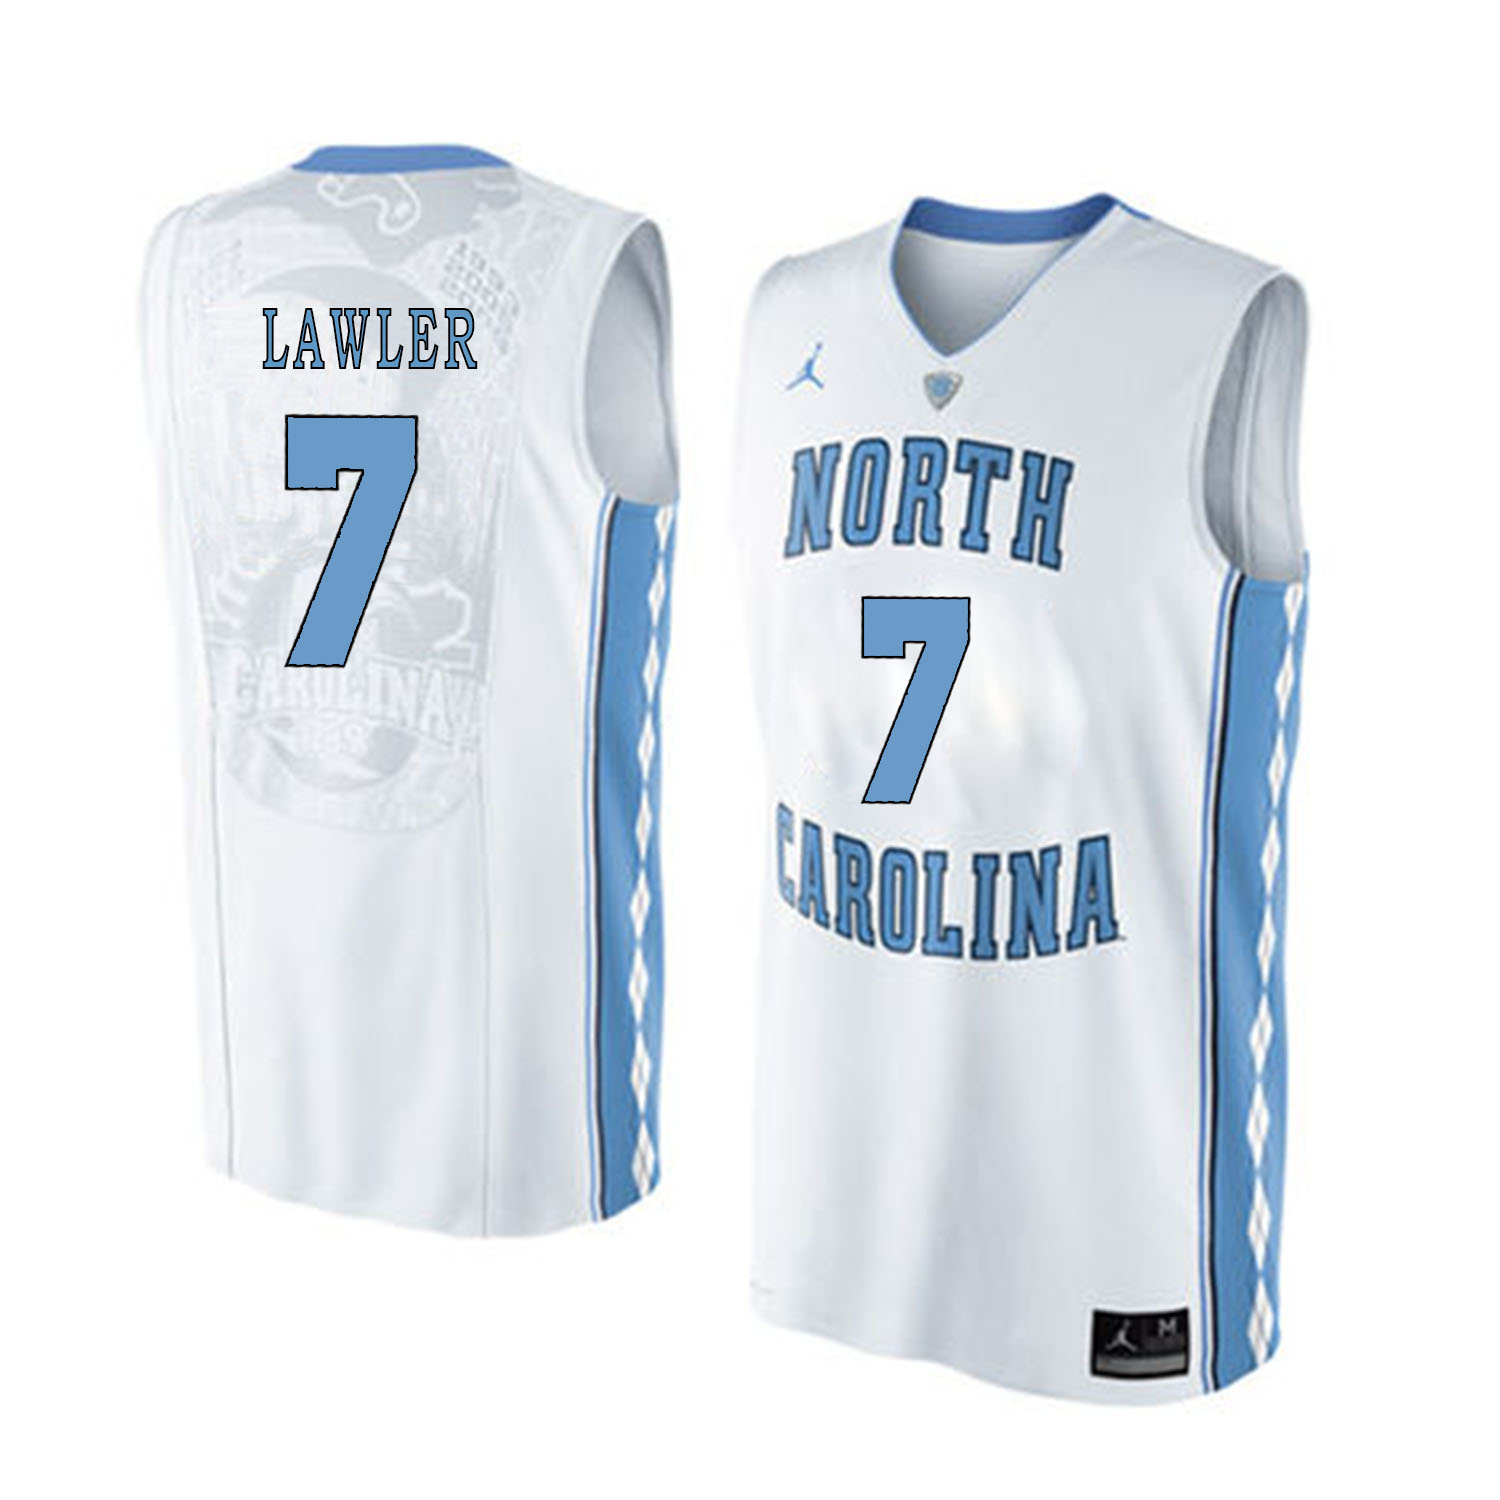 North Carolina Tar Heels 7 Jake Lawler White College Basketball Jersey